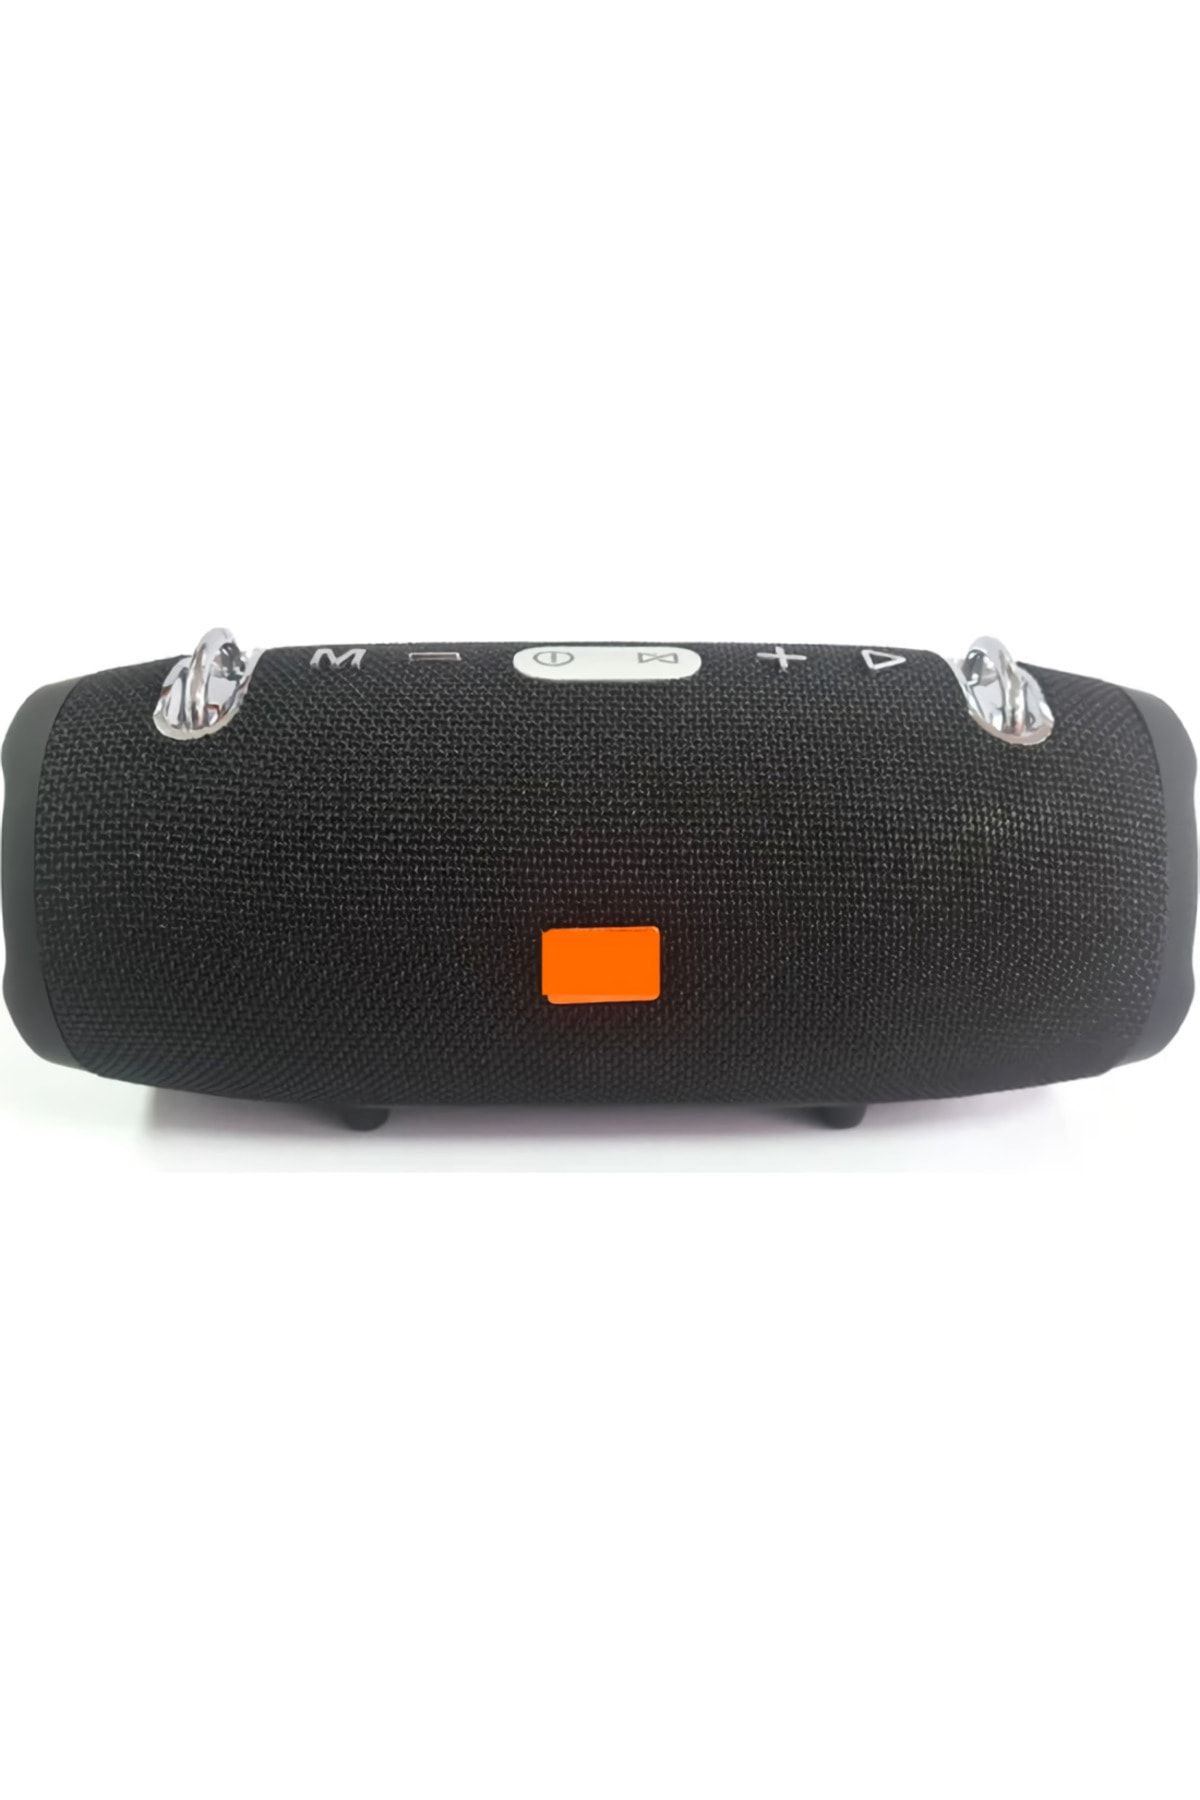 Teknomila Xtreme 2 Su Geçirmez Taşınabilir Askılı Bluetooth Hoparlör Süper Bass